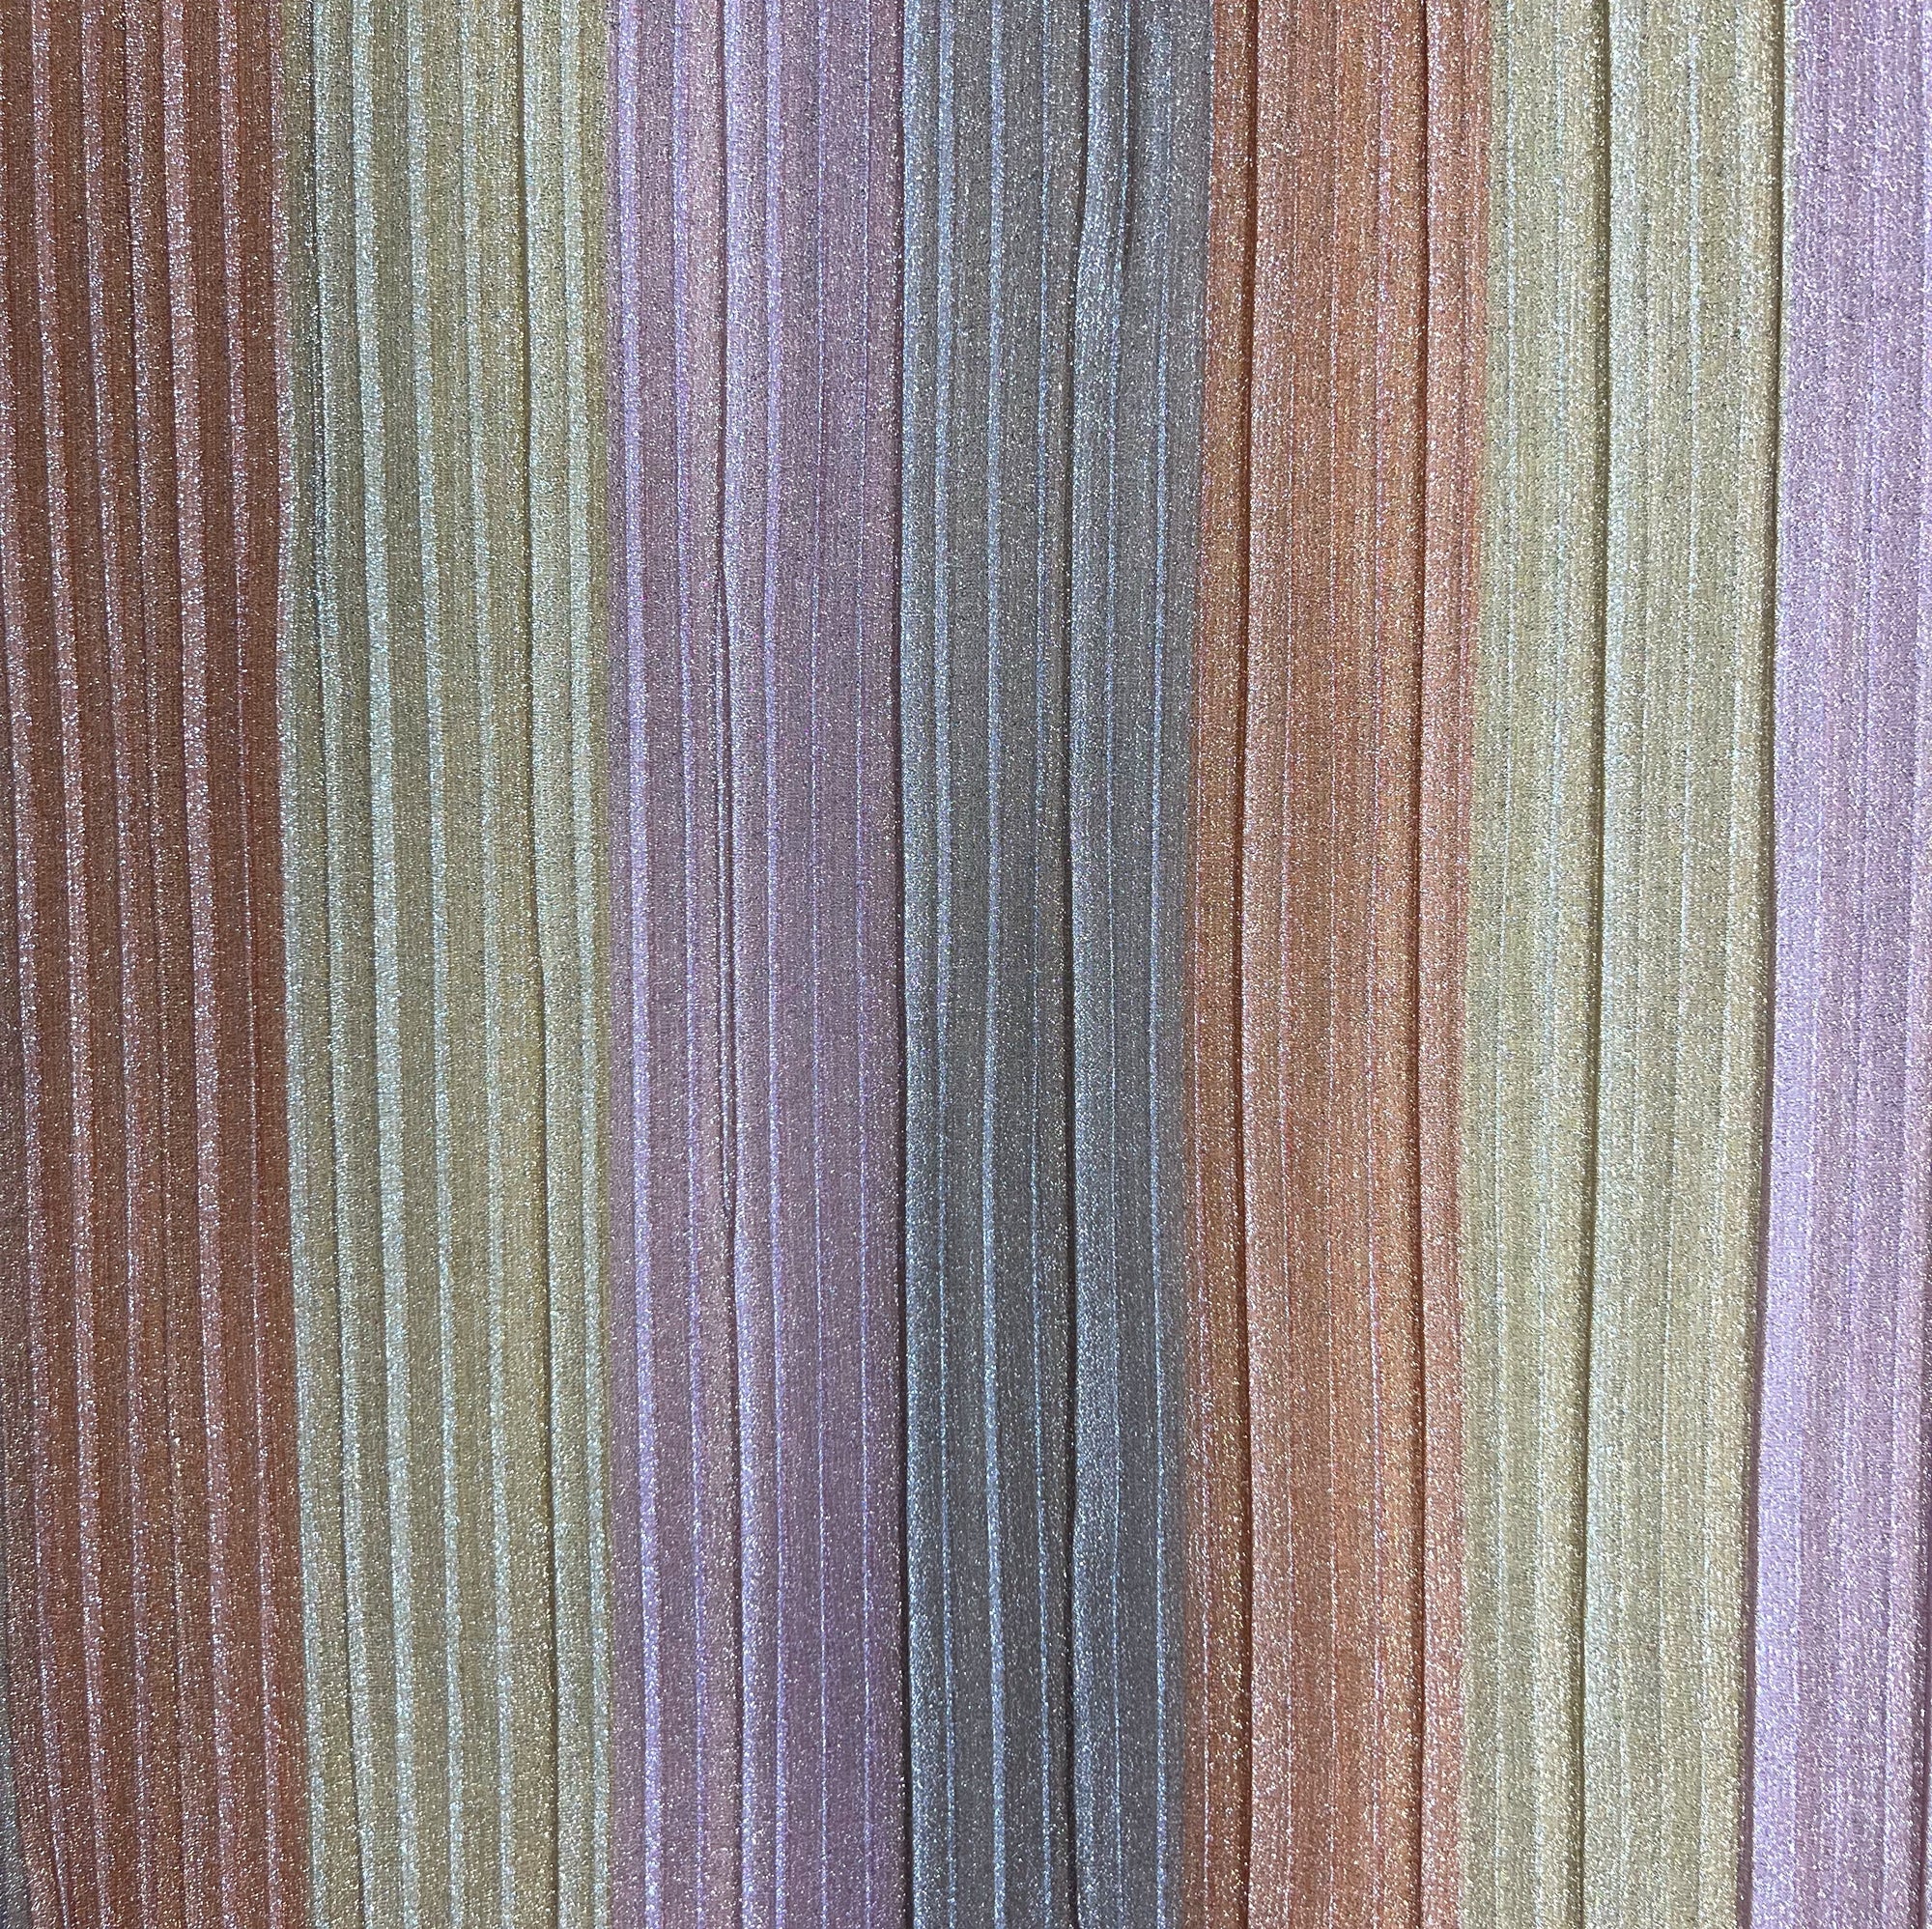 Fabric - pleated soft and radiant rainbow